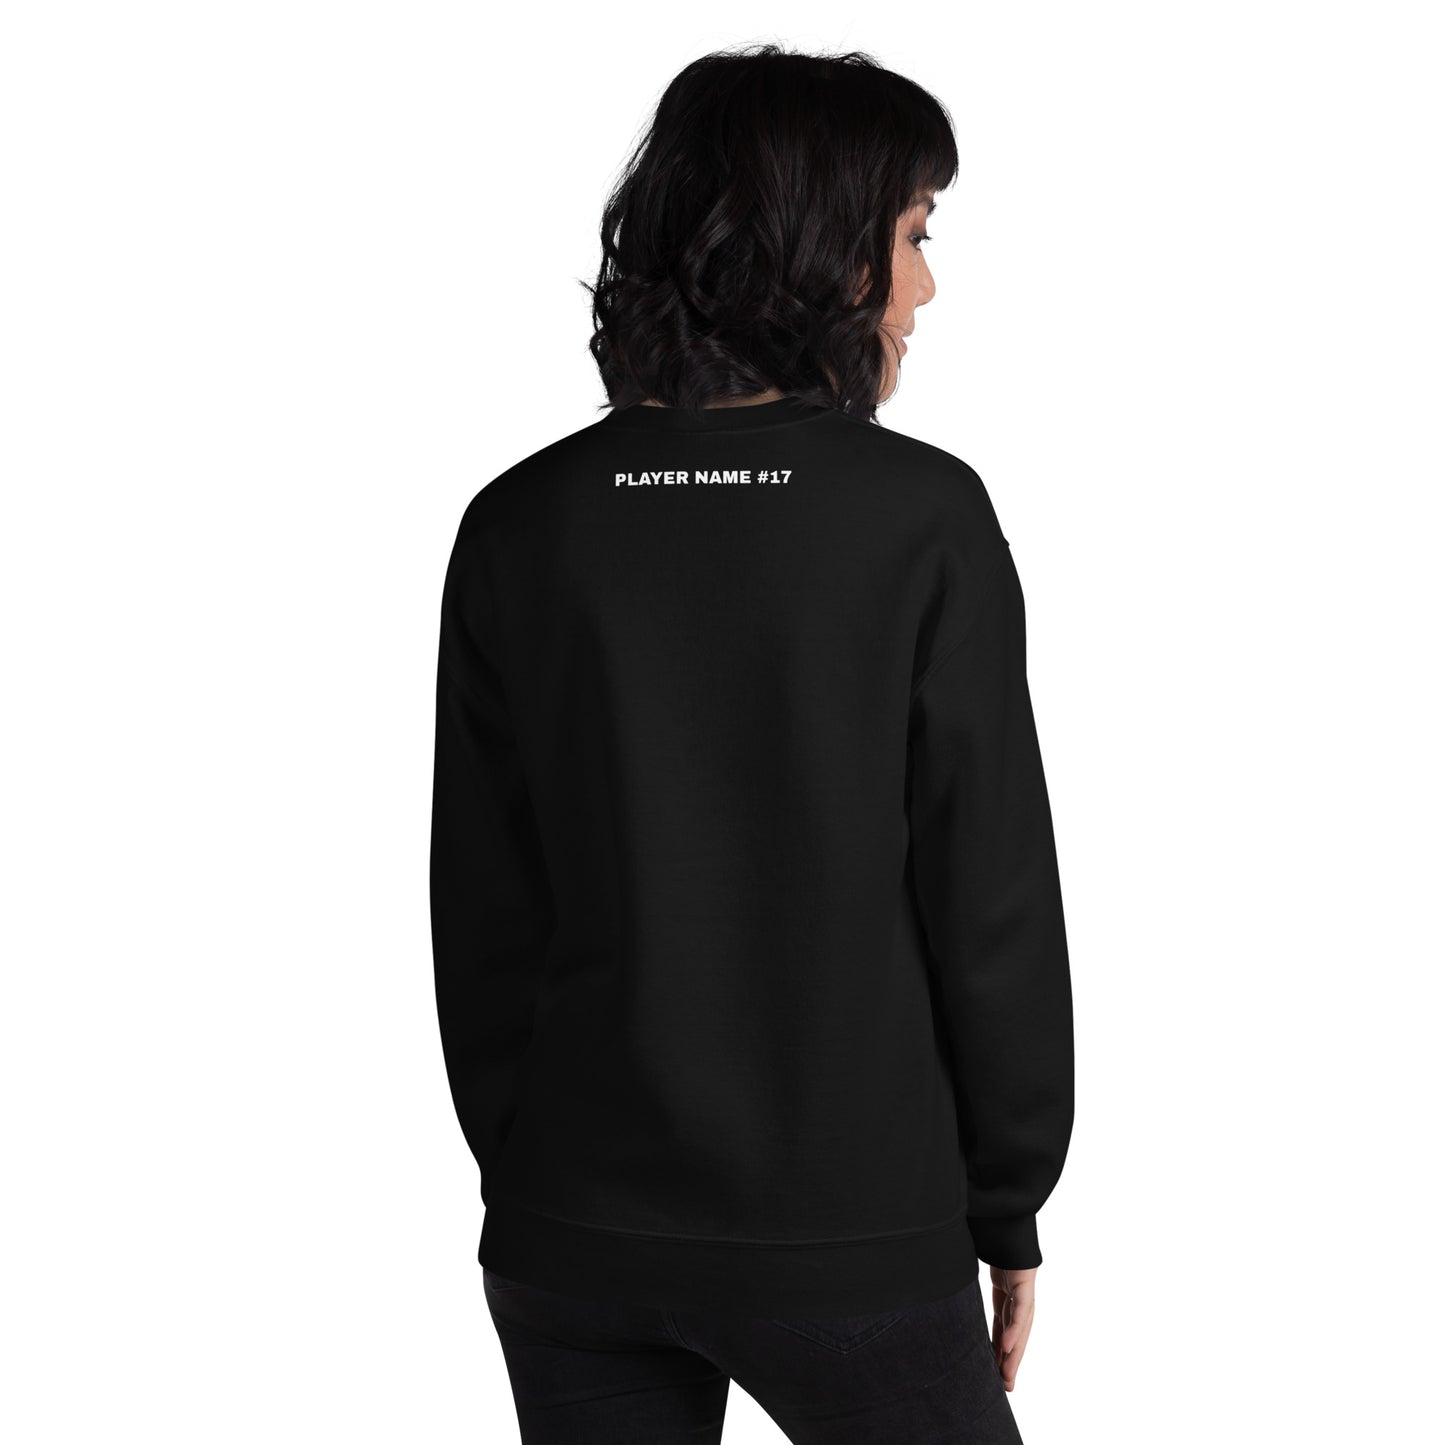 CUSTOM NAME Unisex Sweatshirt: CVA Logo - Multiple Color Options